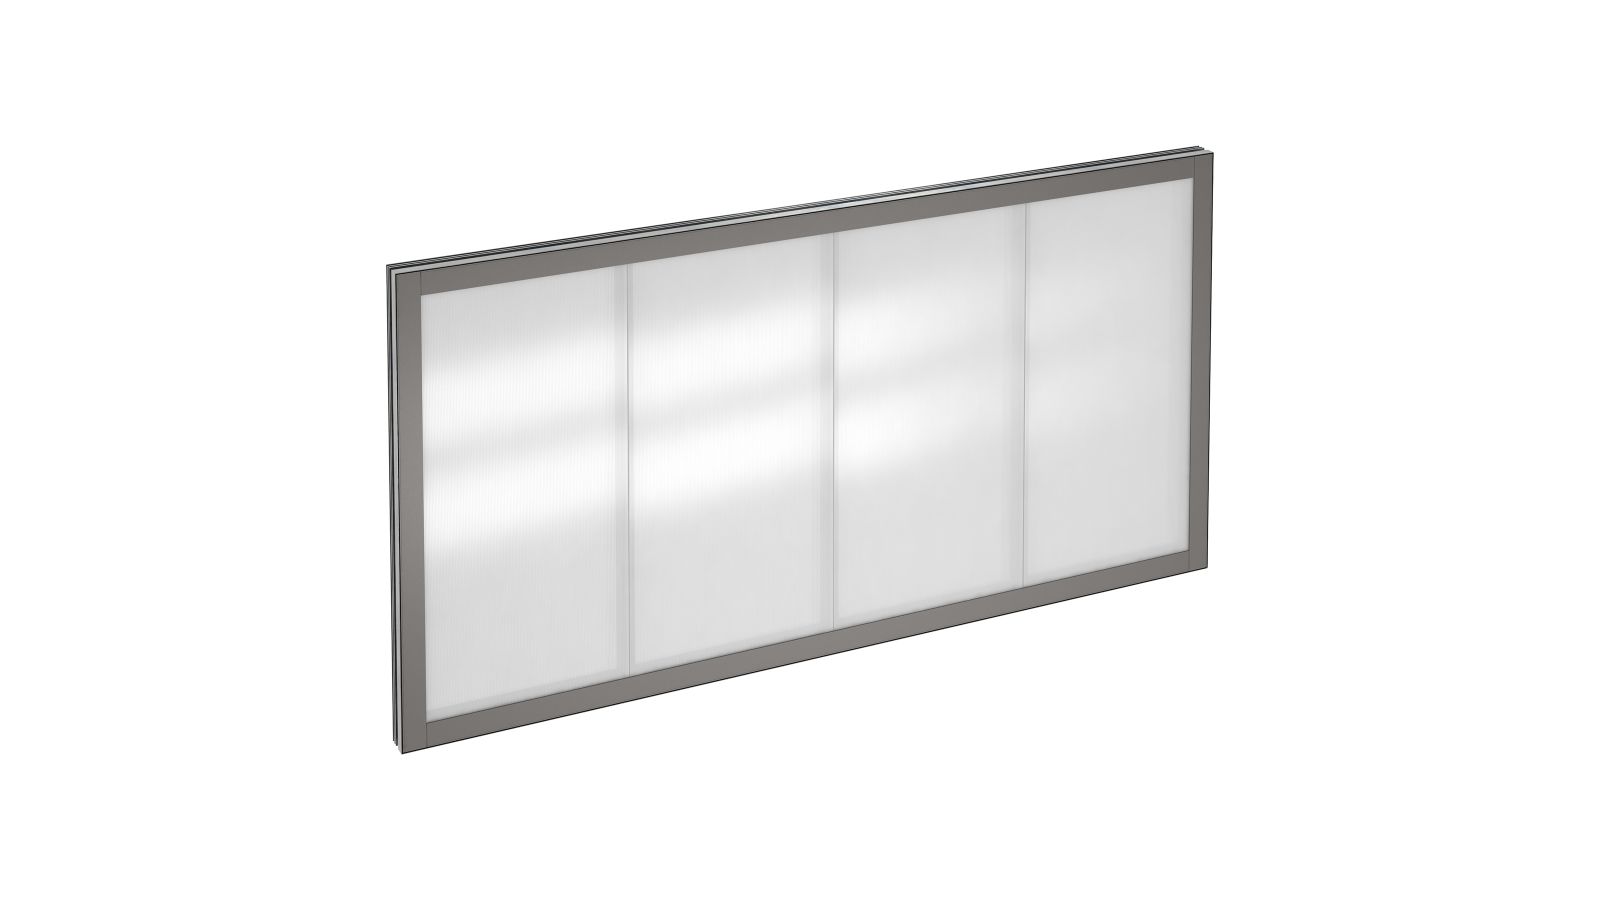 Energy efficient, UniQuad® Translucent Windows for smaller envelope openings